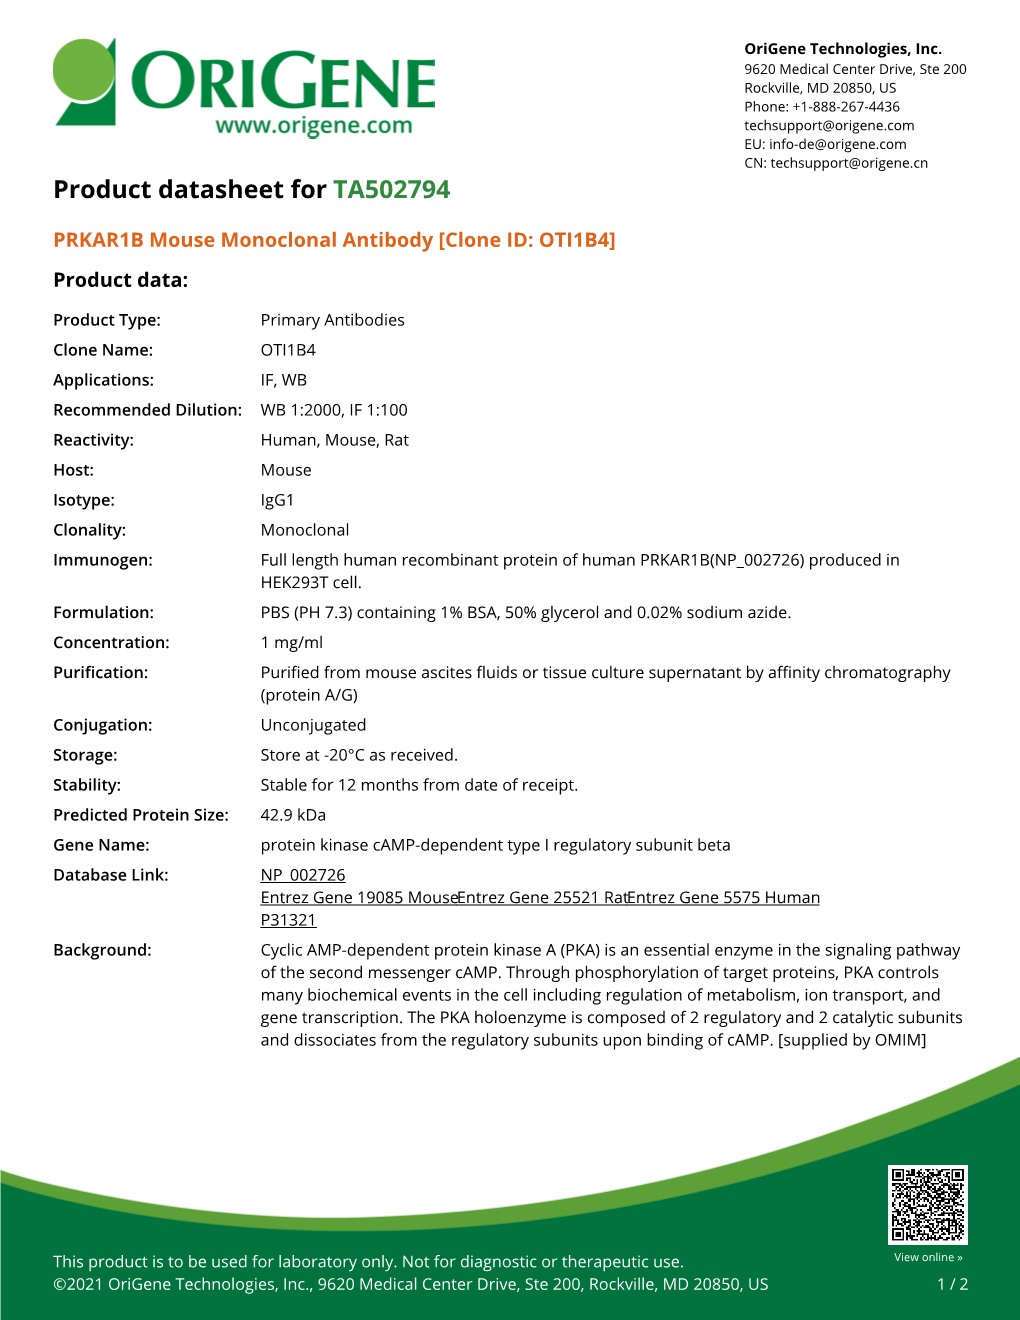 PRKAR1B Mouse Monoclonal Antibody [Clone ID: OTI1B4] Product Data